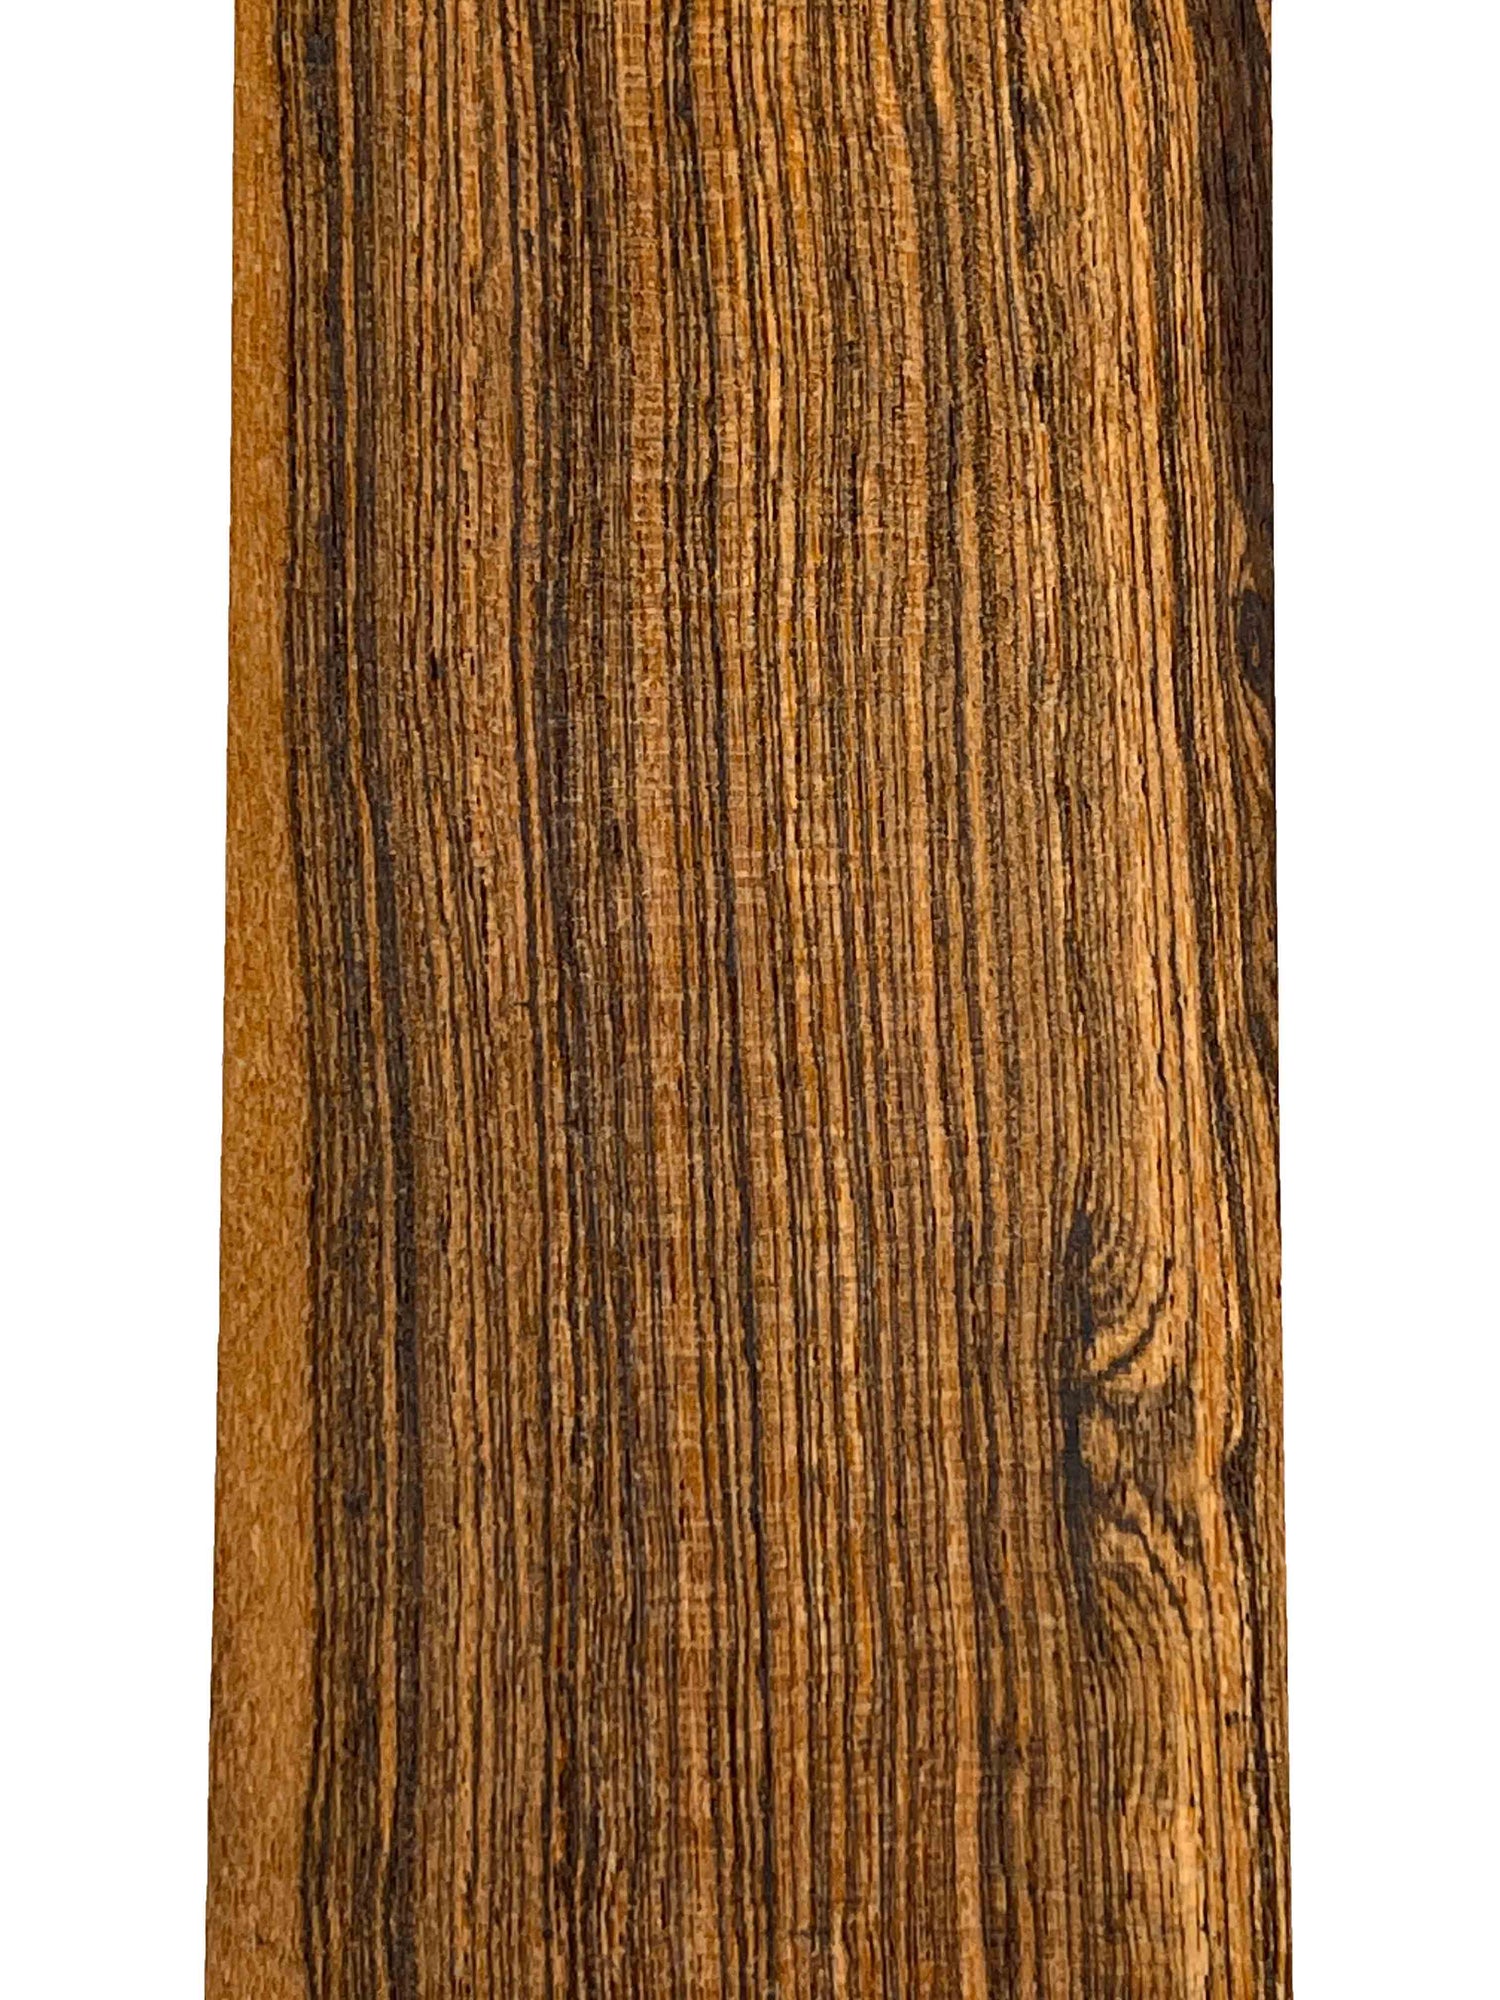 Spanish Cedar Thin Stock Lumber Boards Wood Crafts- Exotic Wood